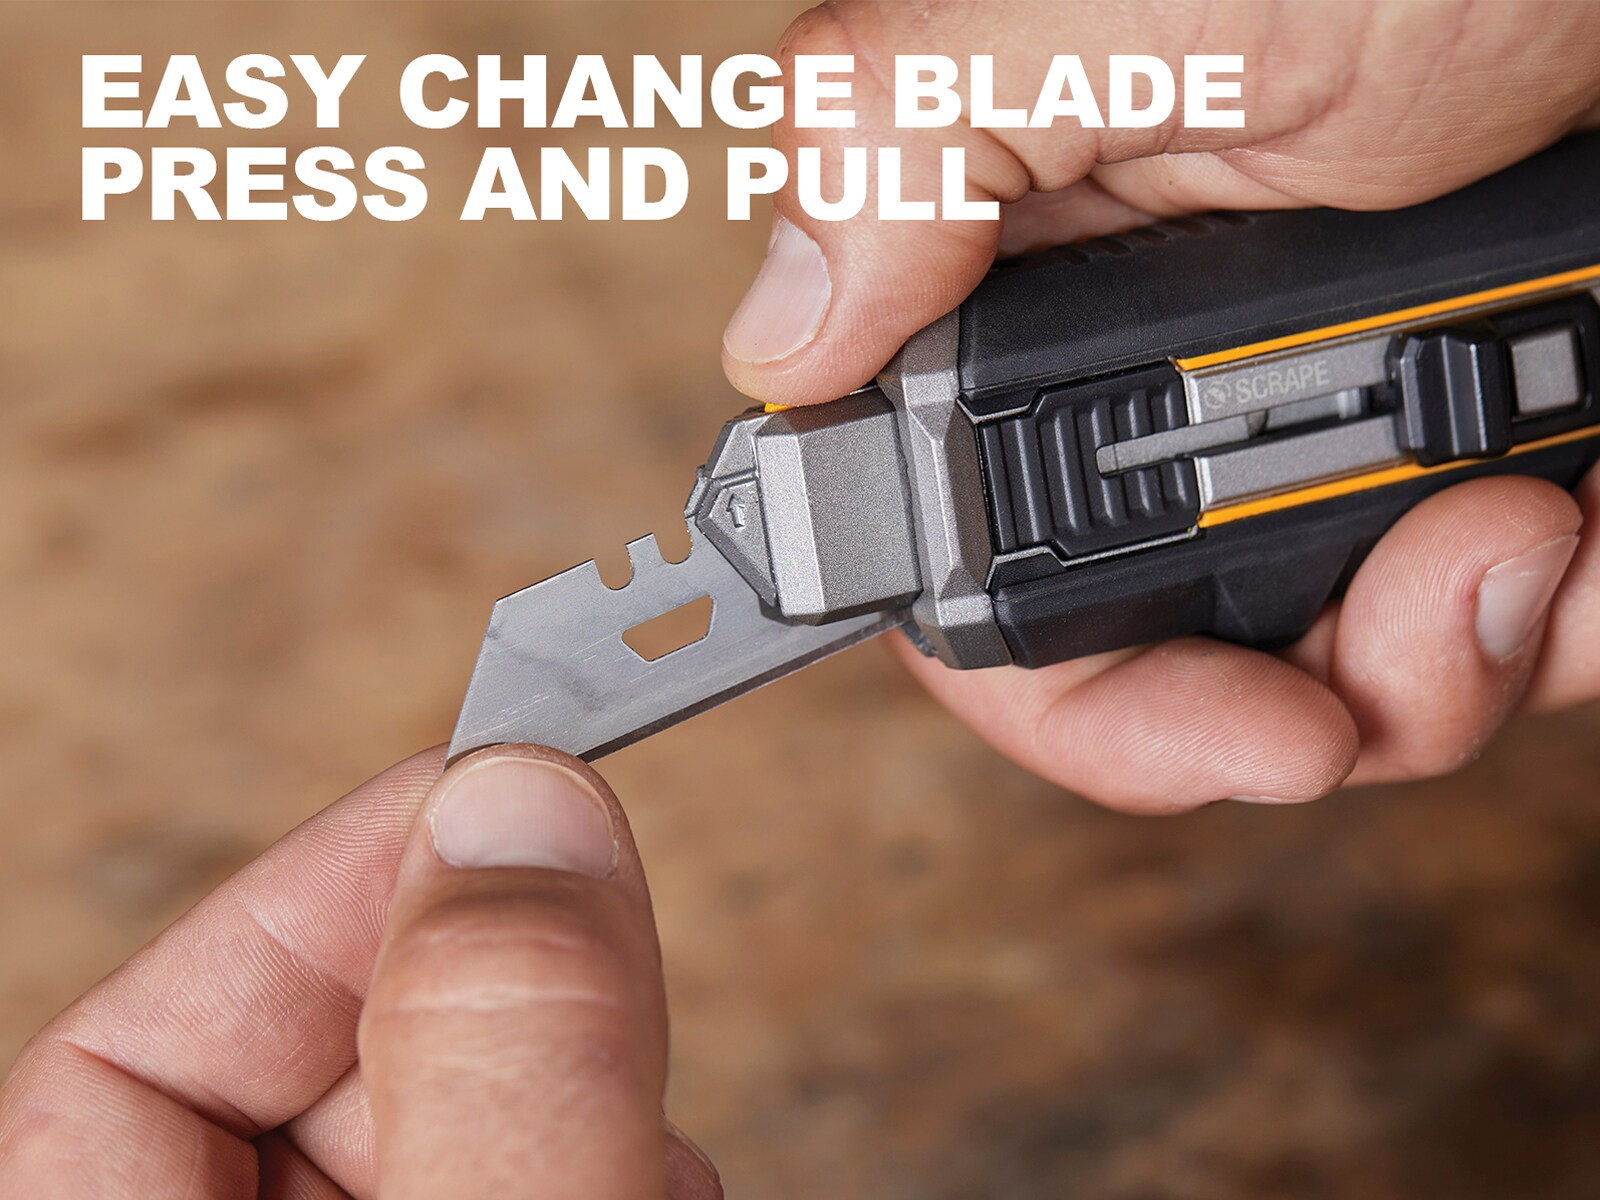 NTD toughbuilt scraper utility knife. I love this brand! : r/Tools